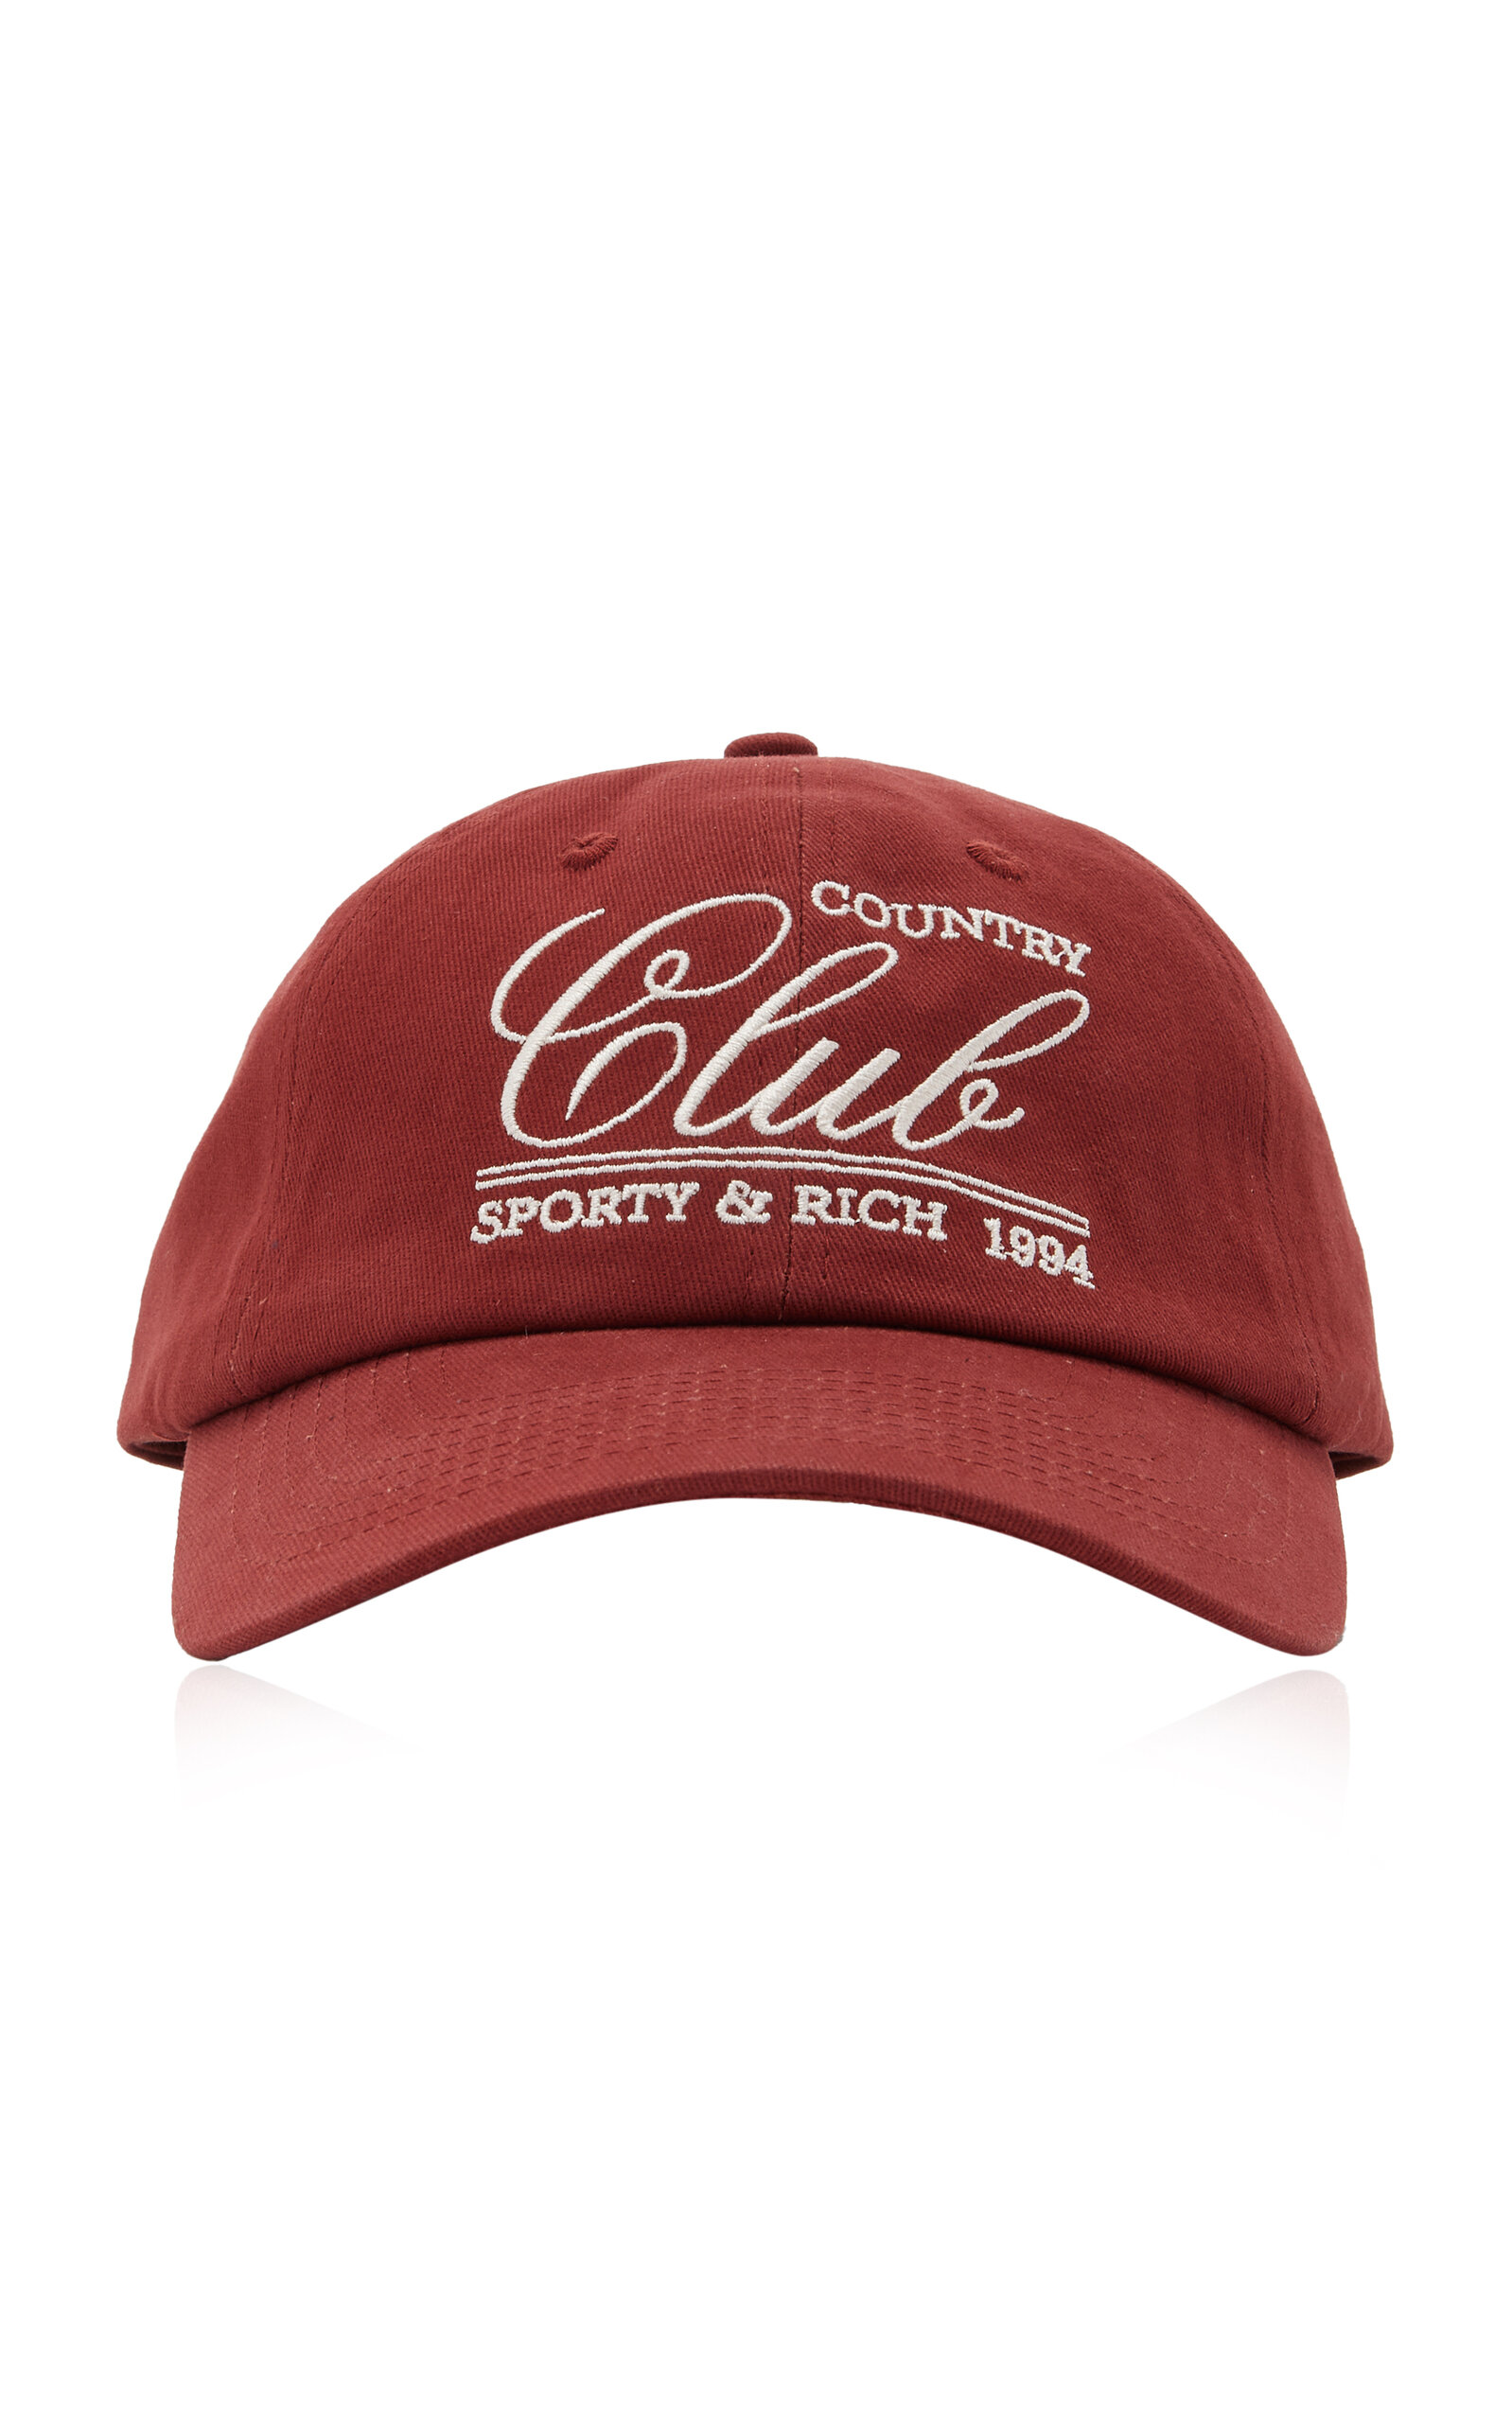 Sporty & Rich Women's '94 Country Club Cotton Baseball Hat